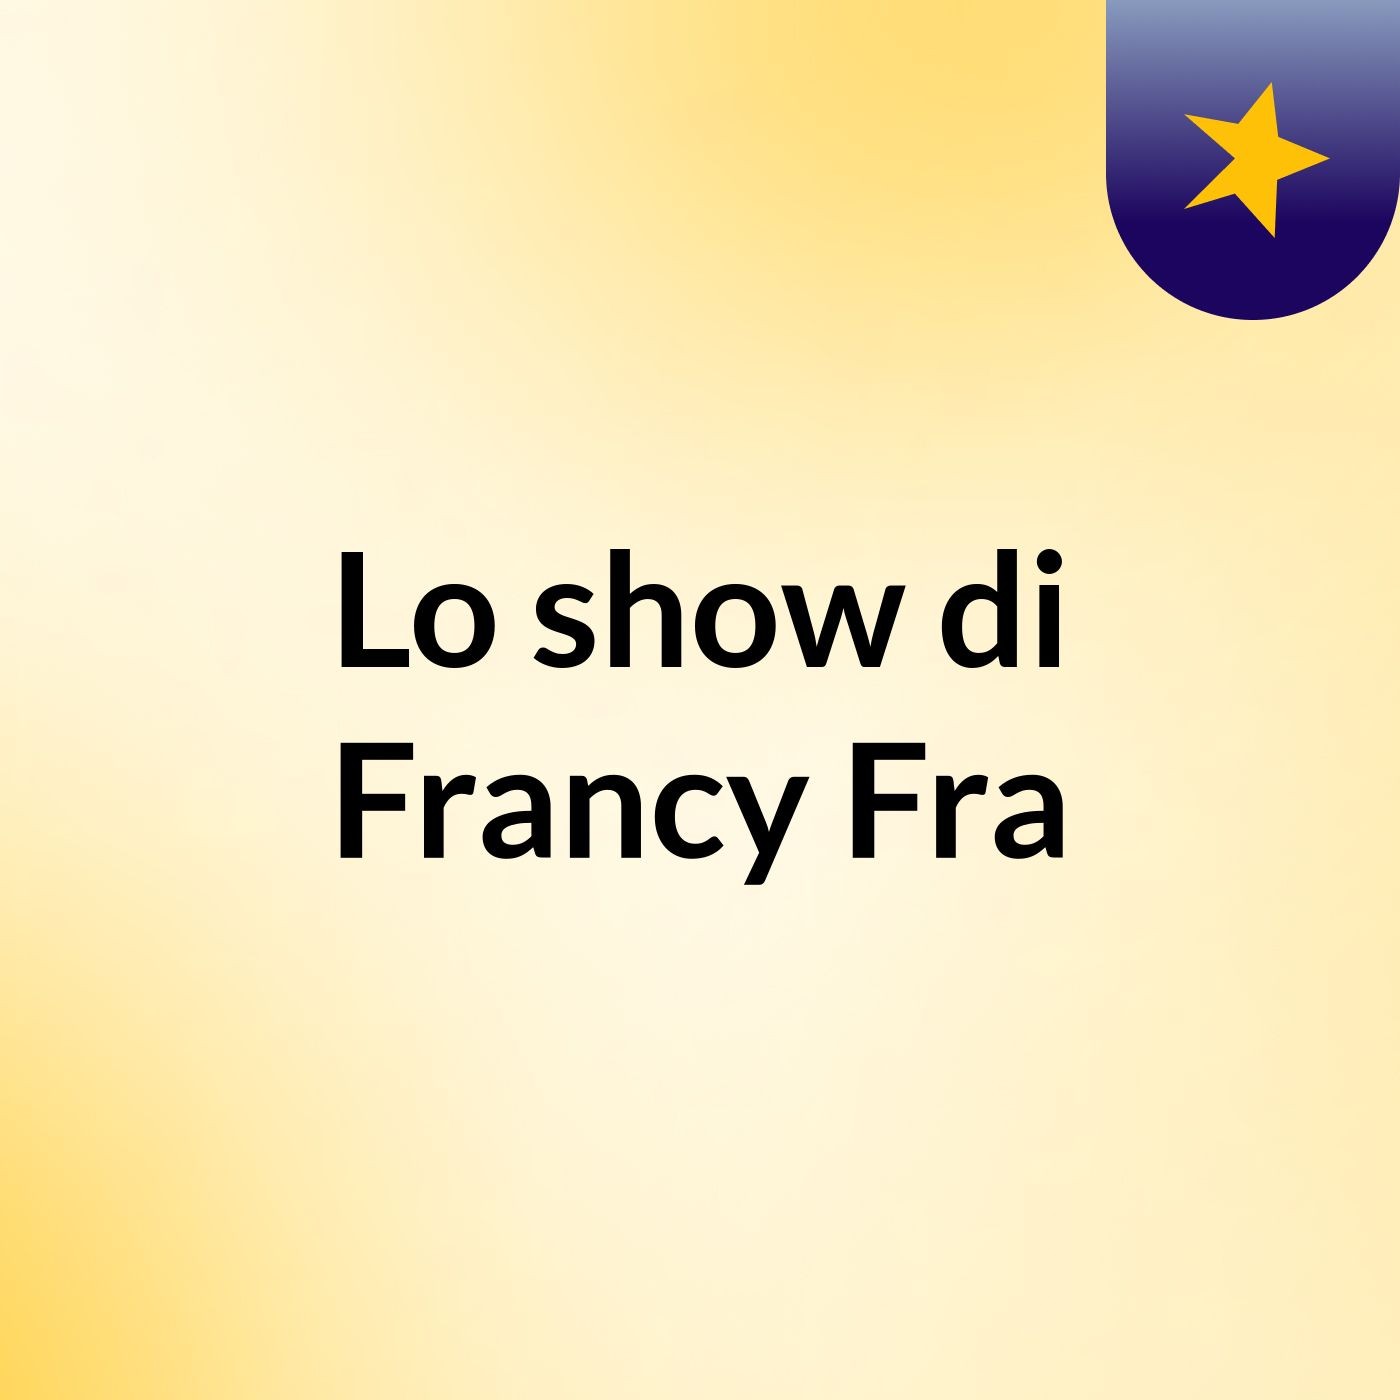 Lo show di Francy Fra